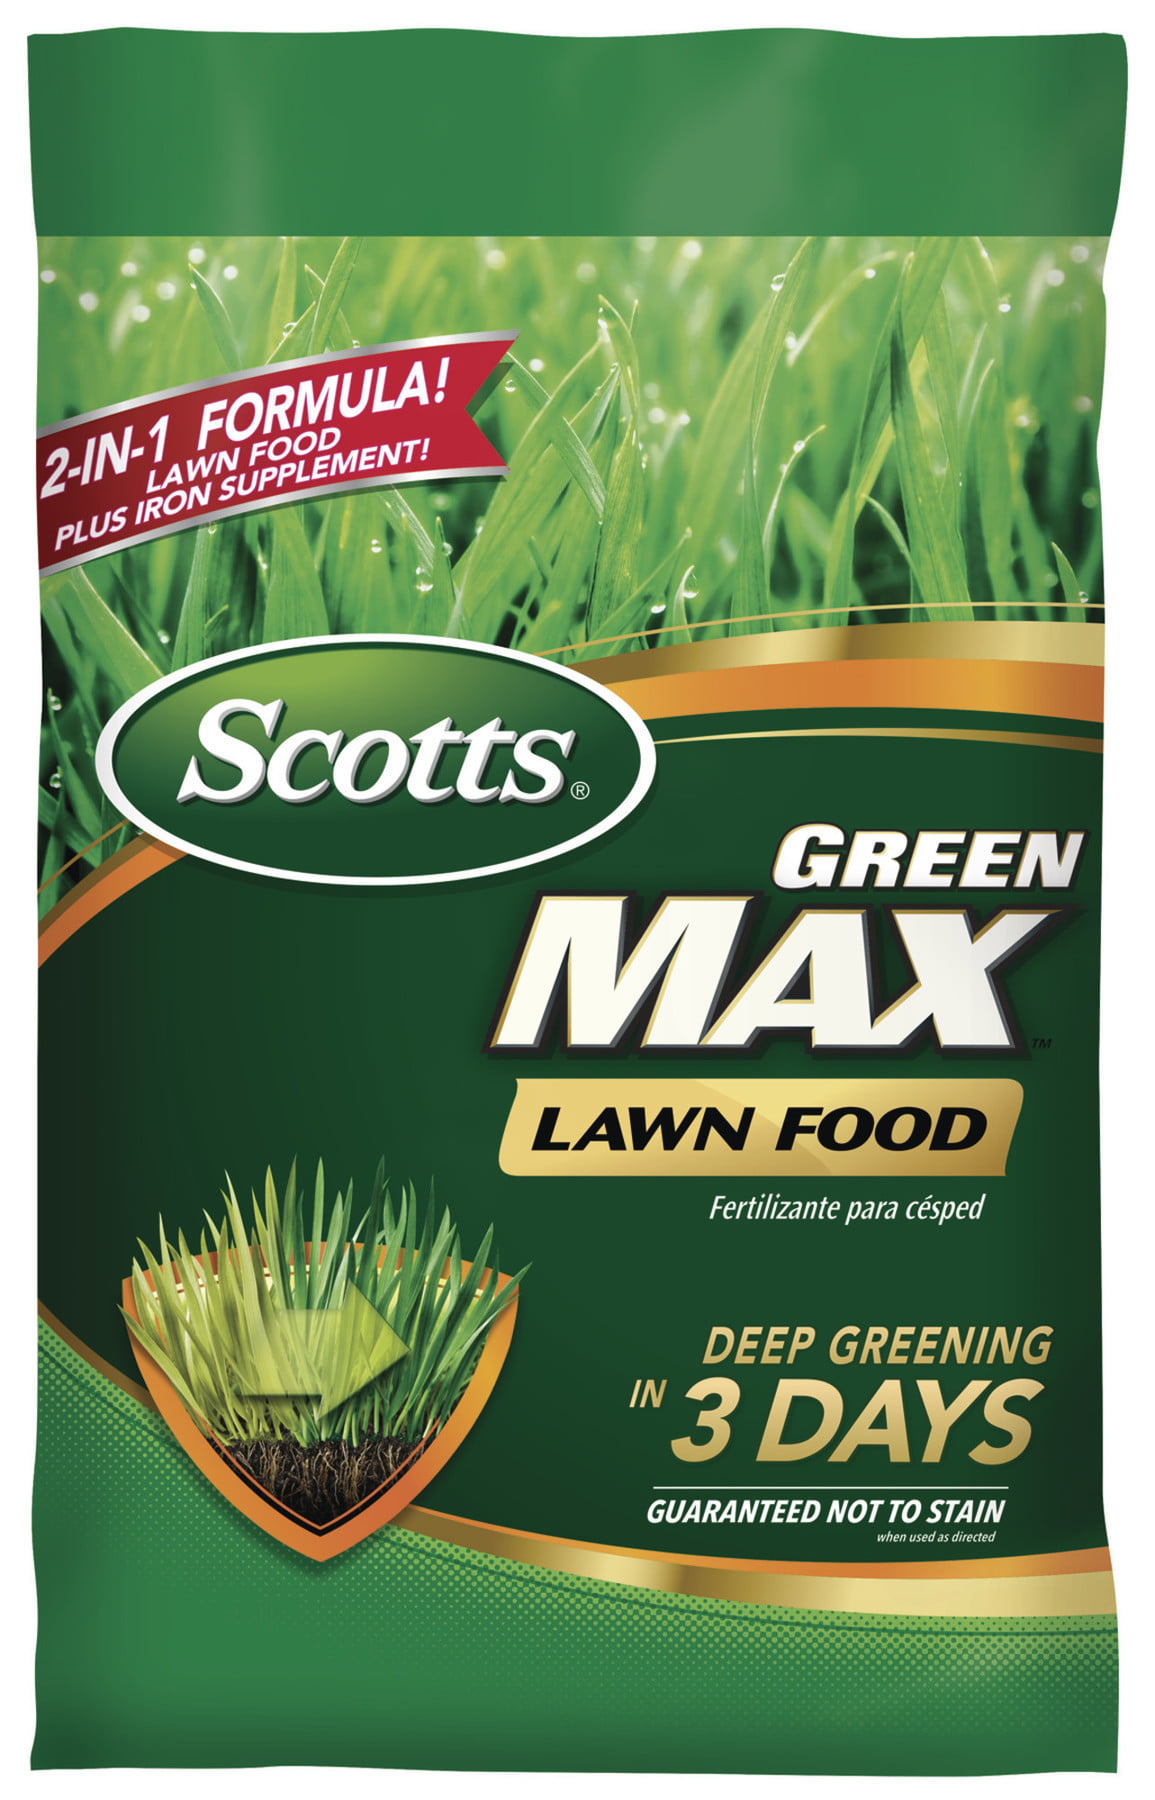 Scotts Green Max Lawn Food, 5,000 sq. ft. - Walmart.com - Walmart.com